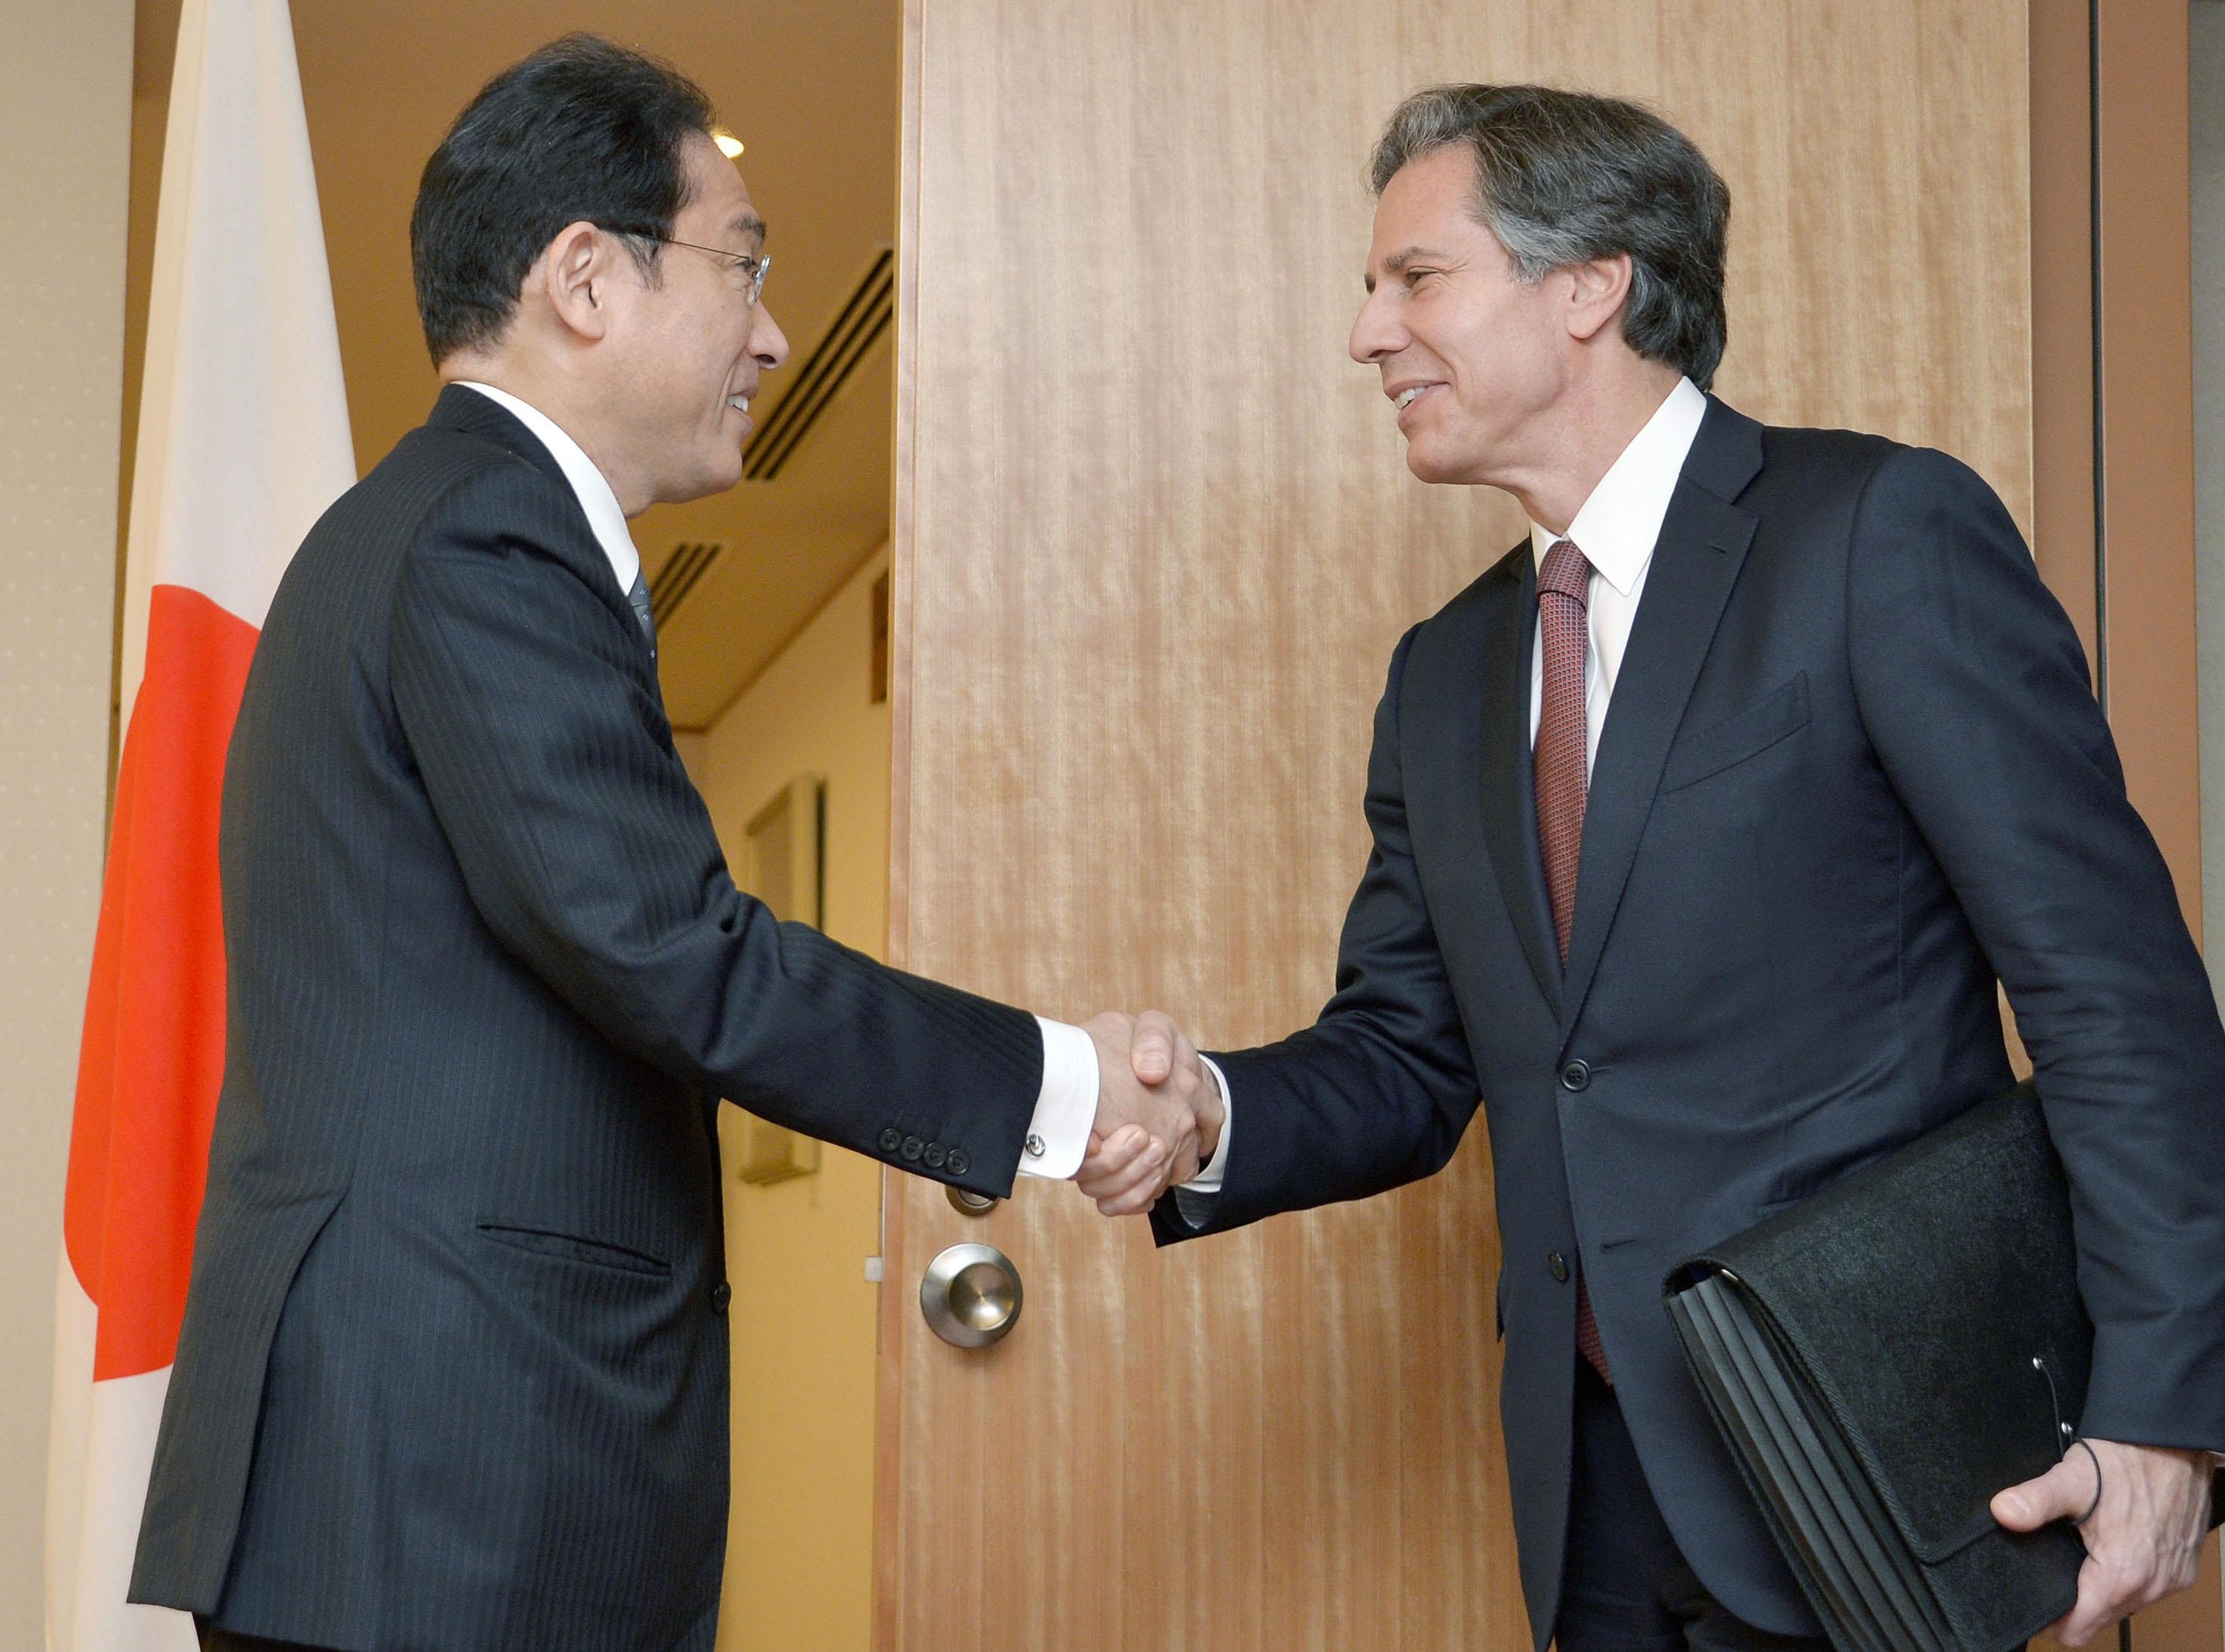 Foreign Minister Fumio Kishida greets U.S. Deputy Secretary of State Antony Blinken in Tokyo on Monday. | KYODO